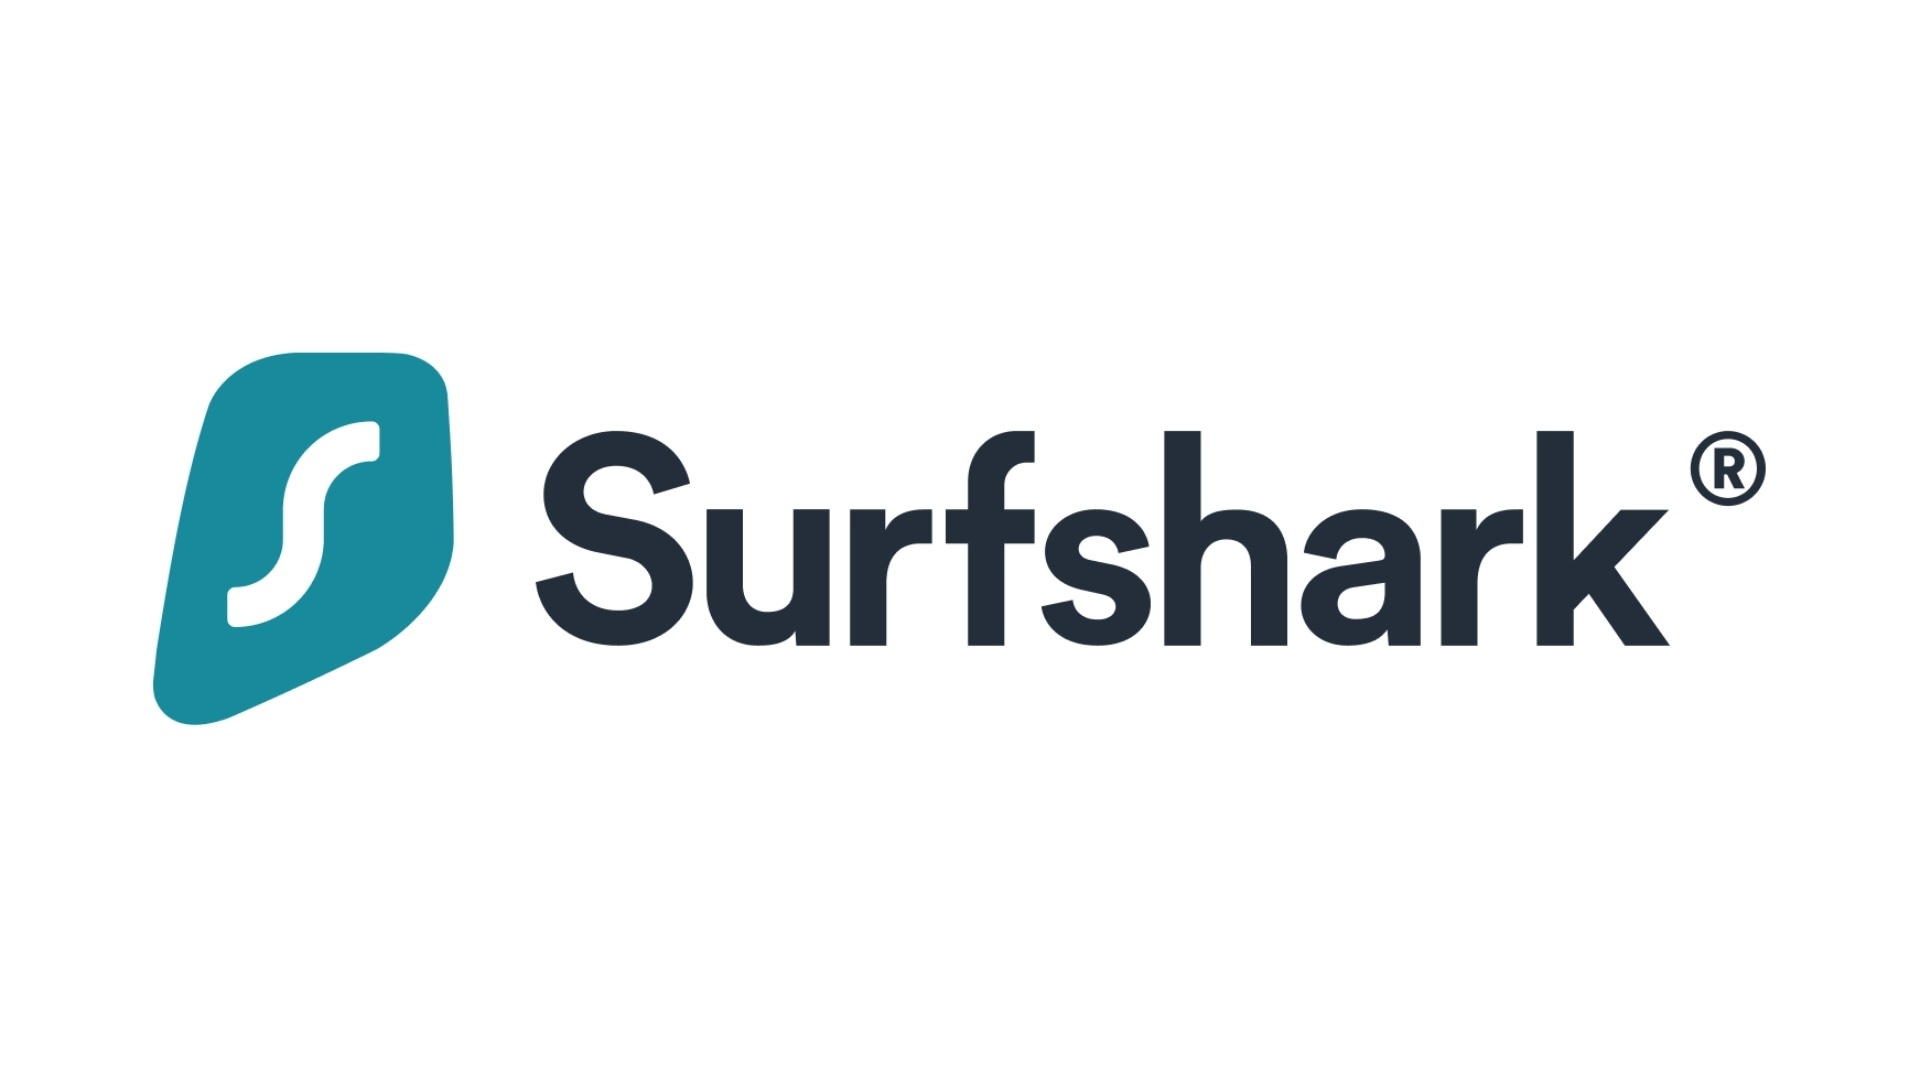 VPN servers for Surfshark.  The image shows the company logo.